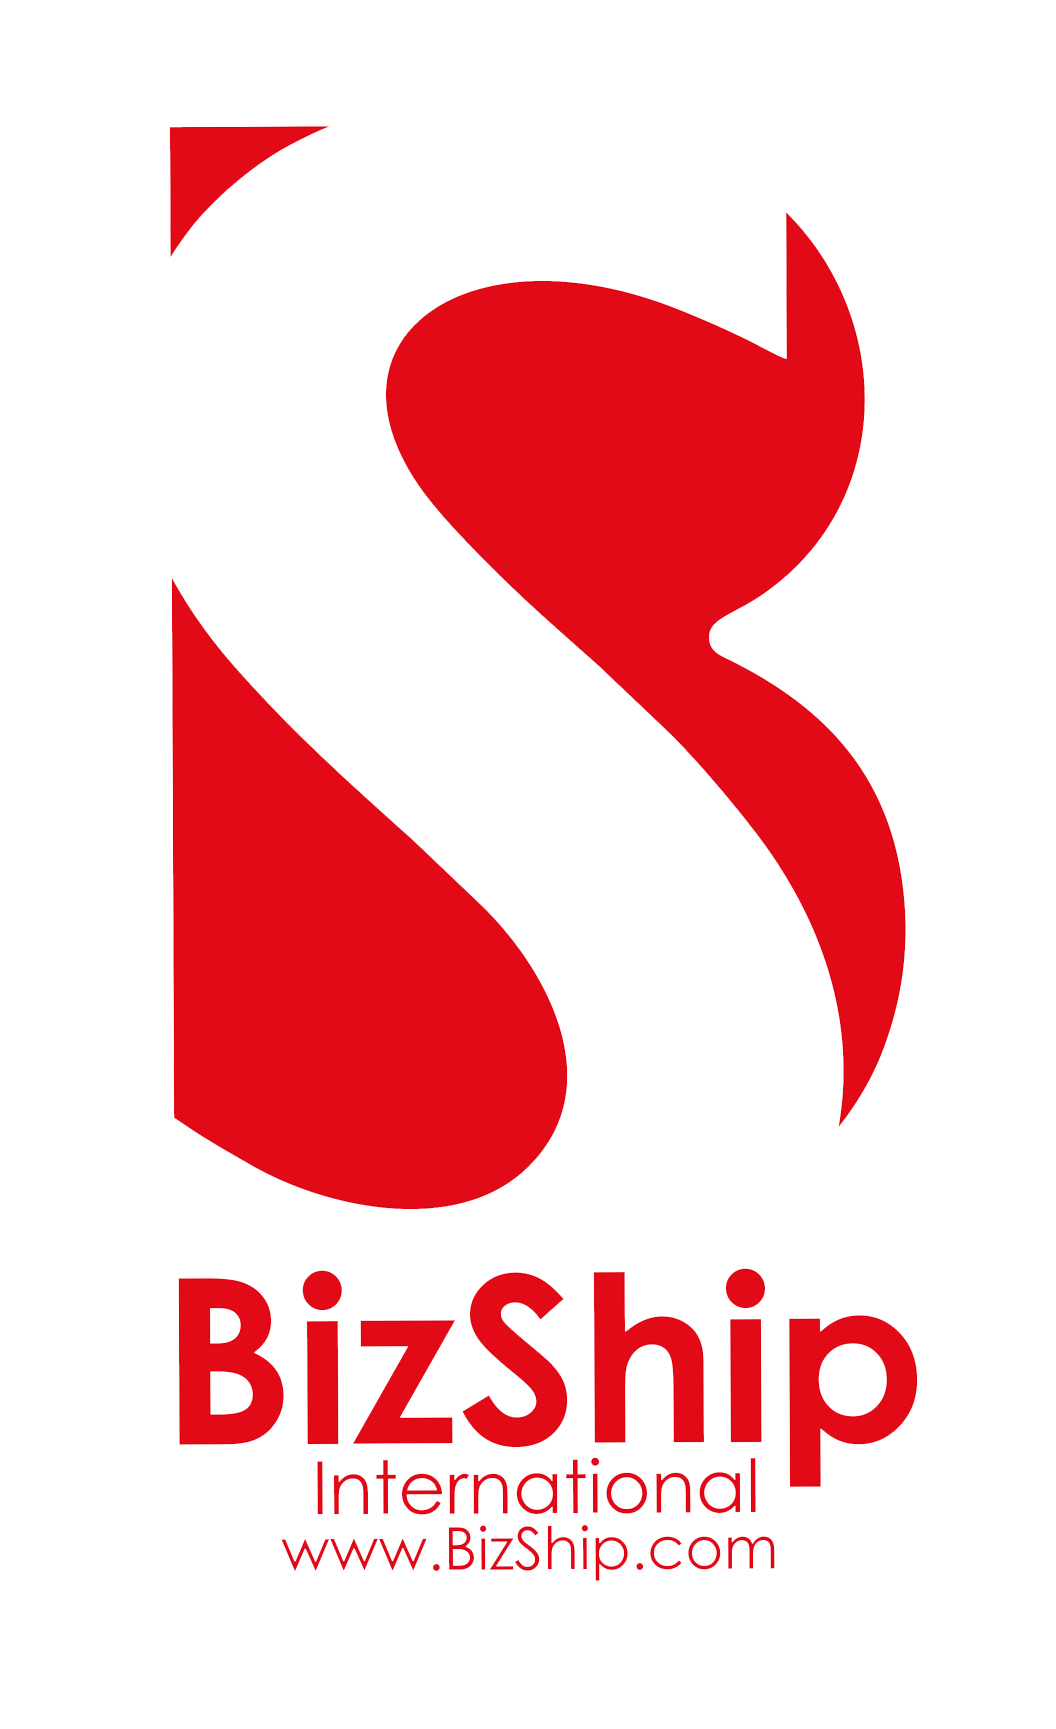 BizShip International Logo & website